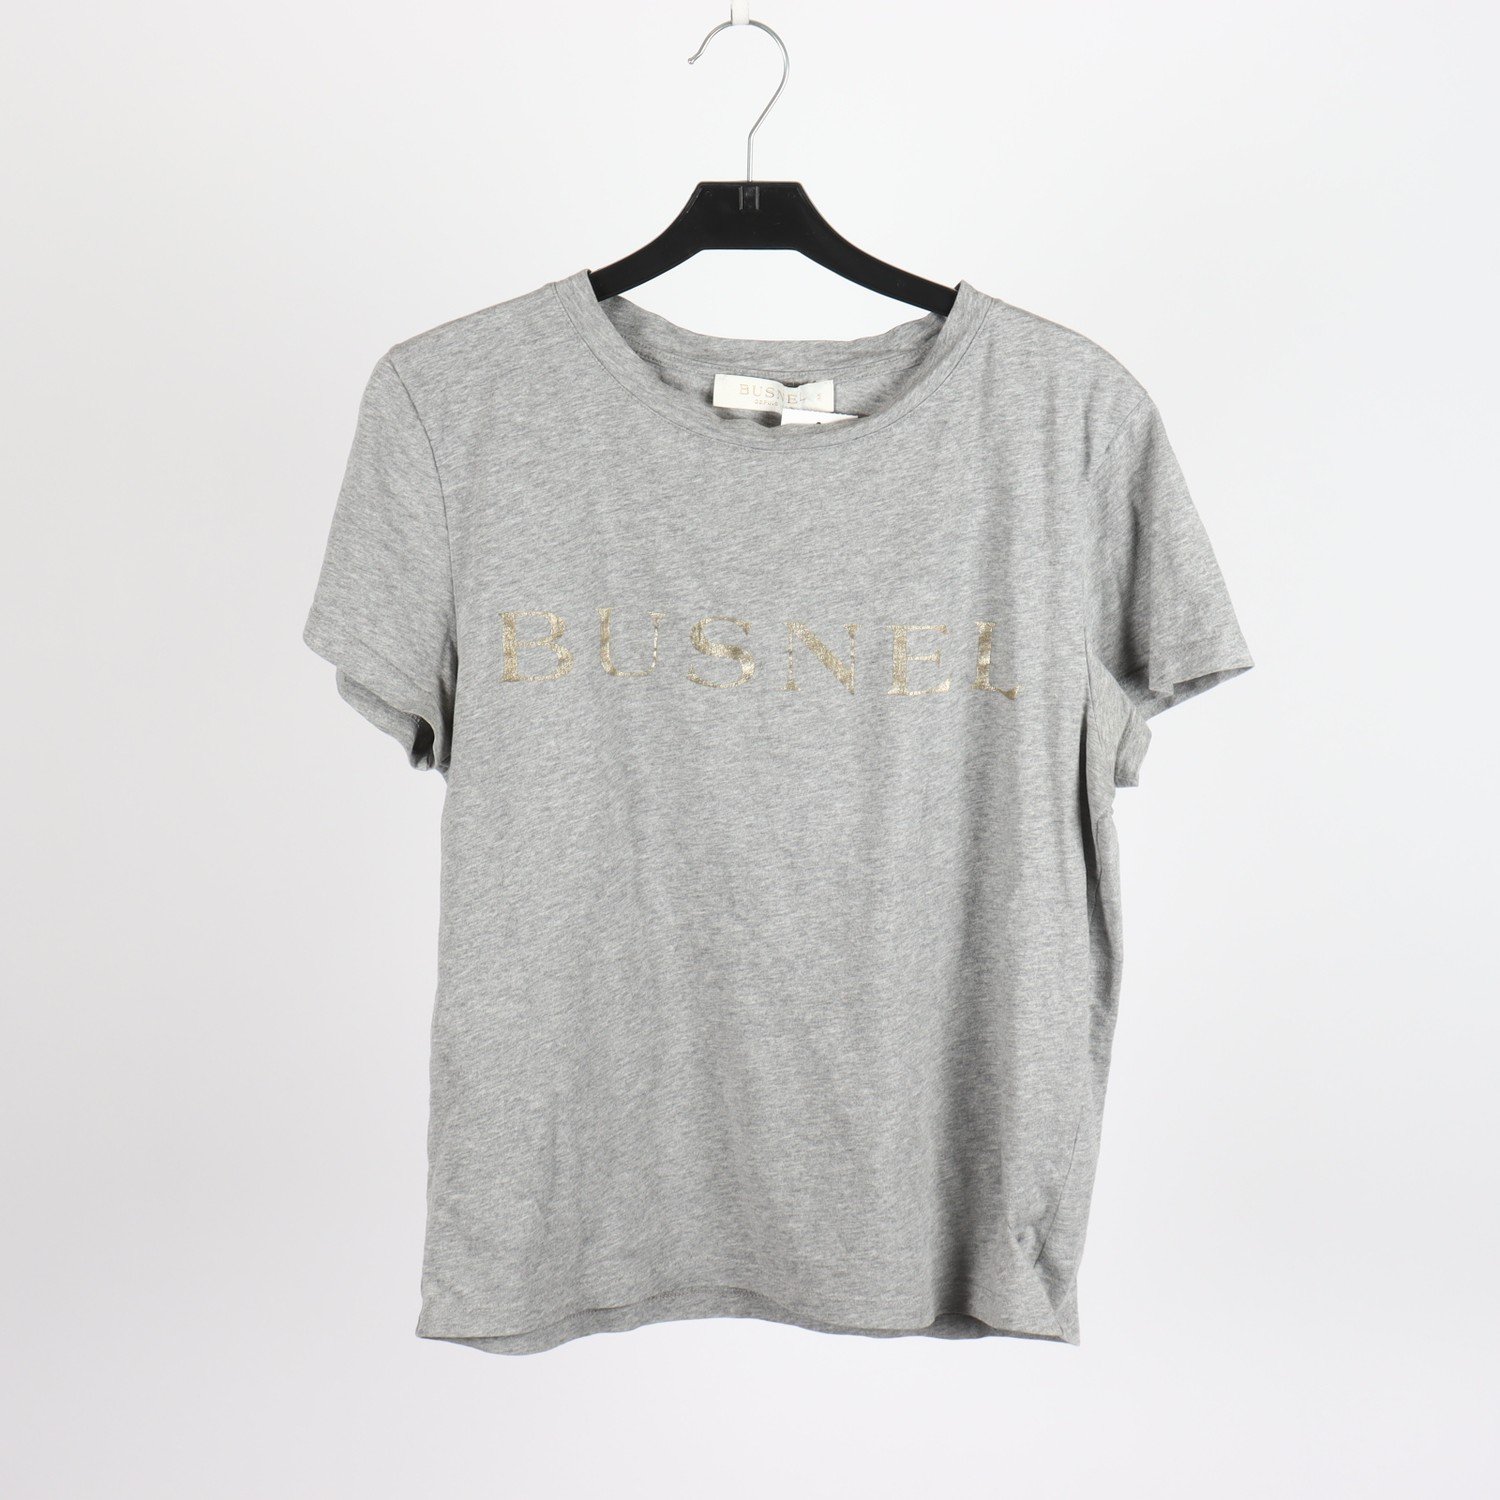 T-shirt, Busnel, grå, guld, stl. 34